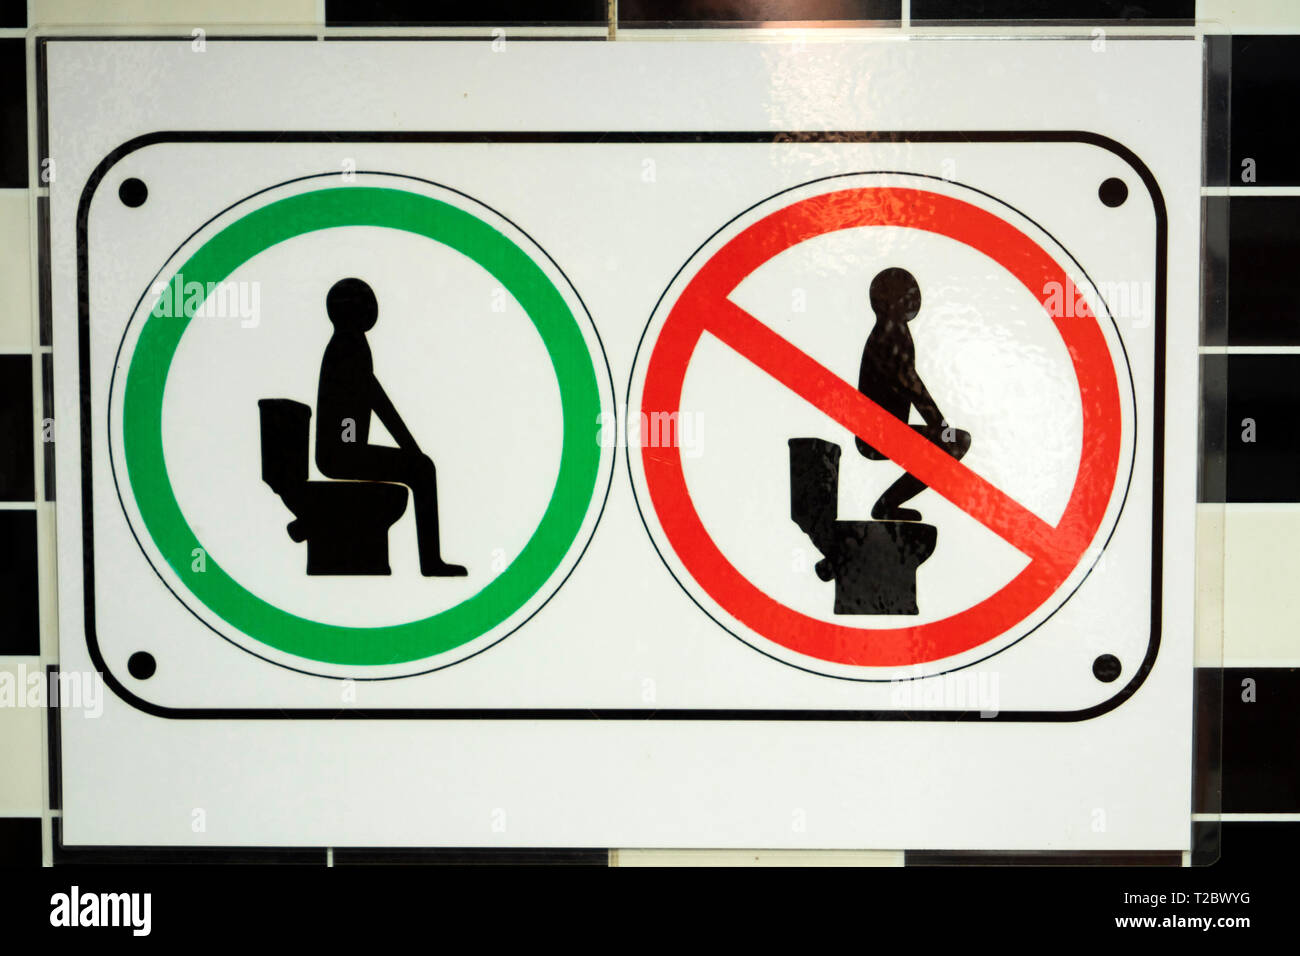 Kambodscha, Kampong (Kompong Cham), nicht auf WC-Sitz anmelden Café Toiletten stehen Stockfoto